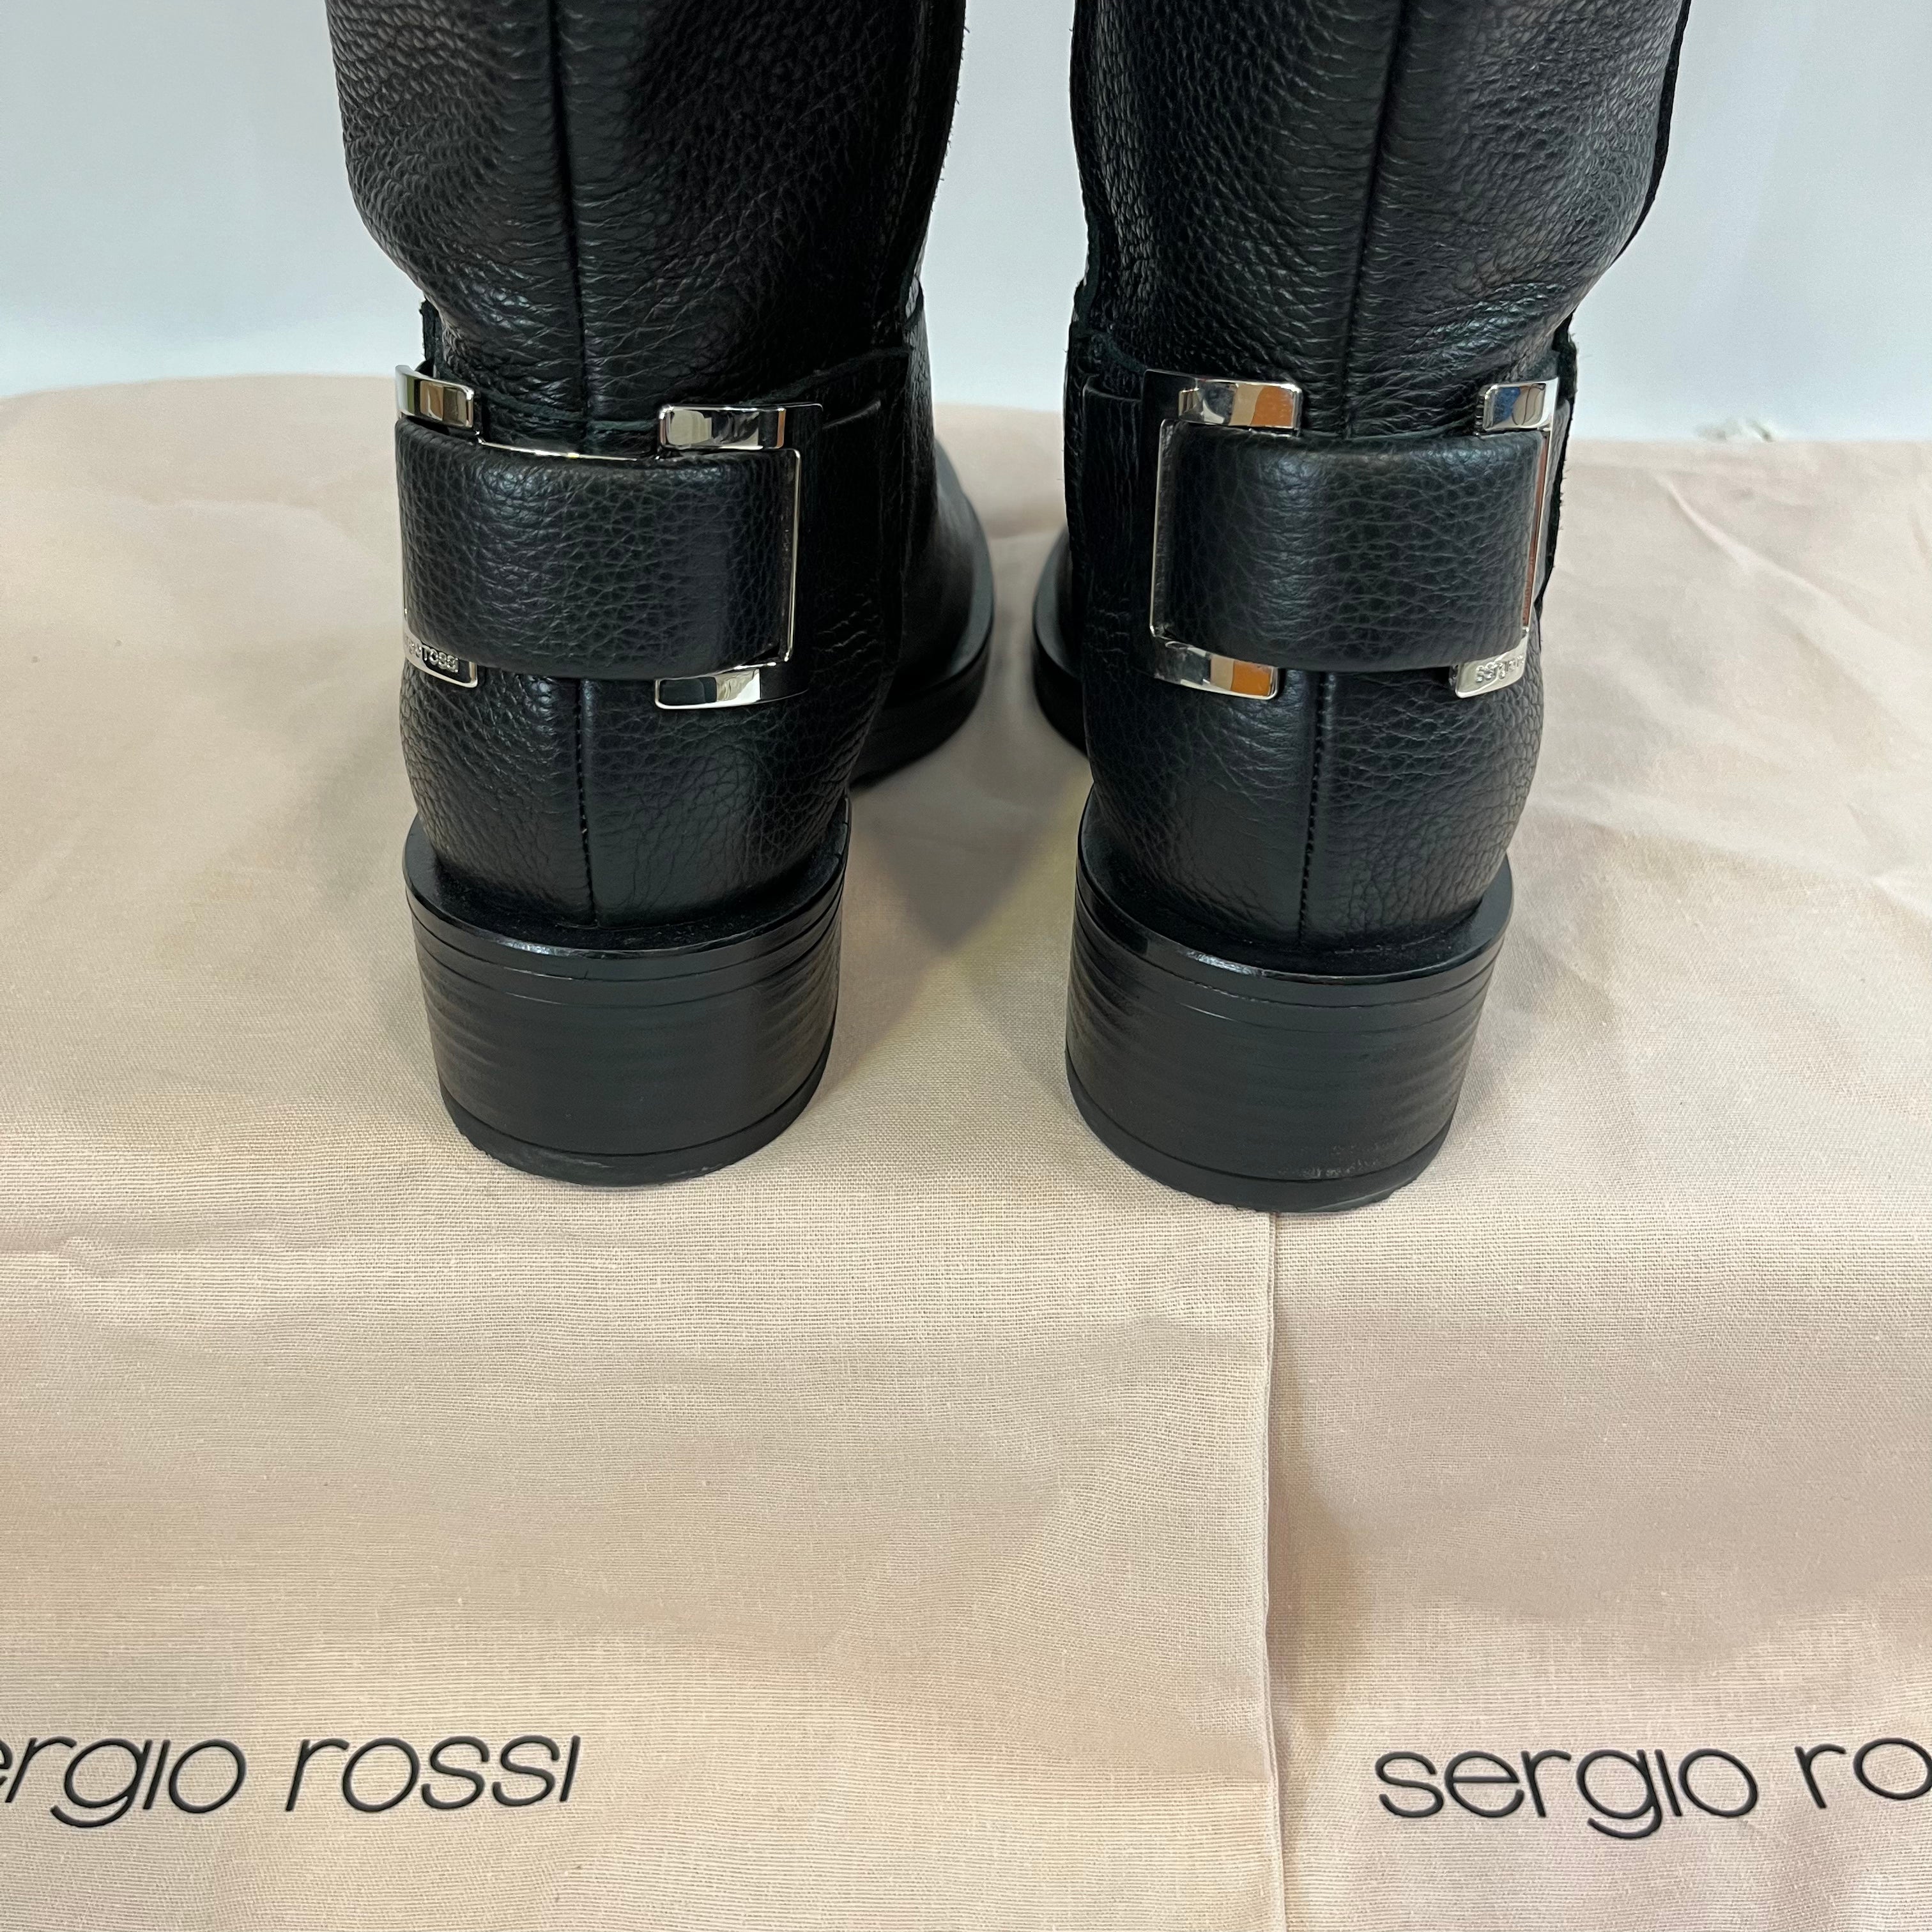 Sergio Rossi - Riding boots